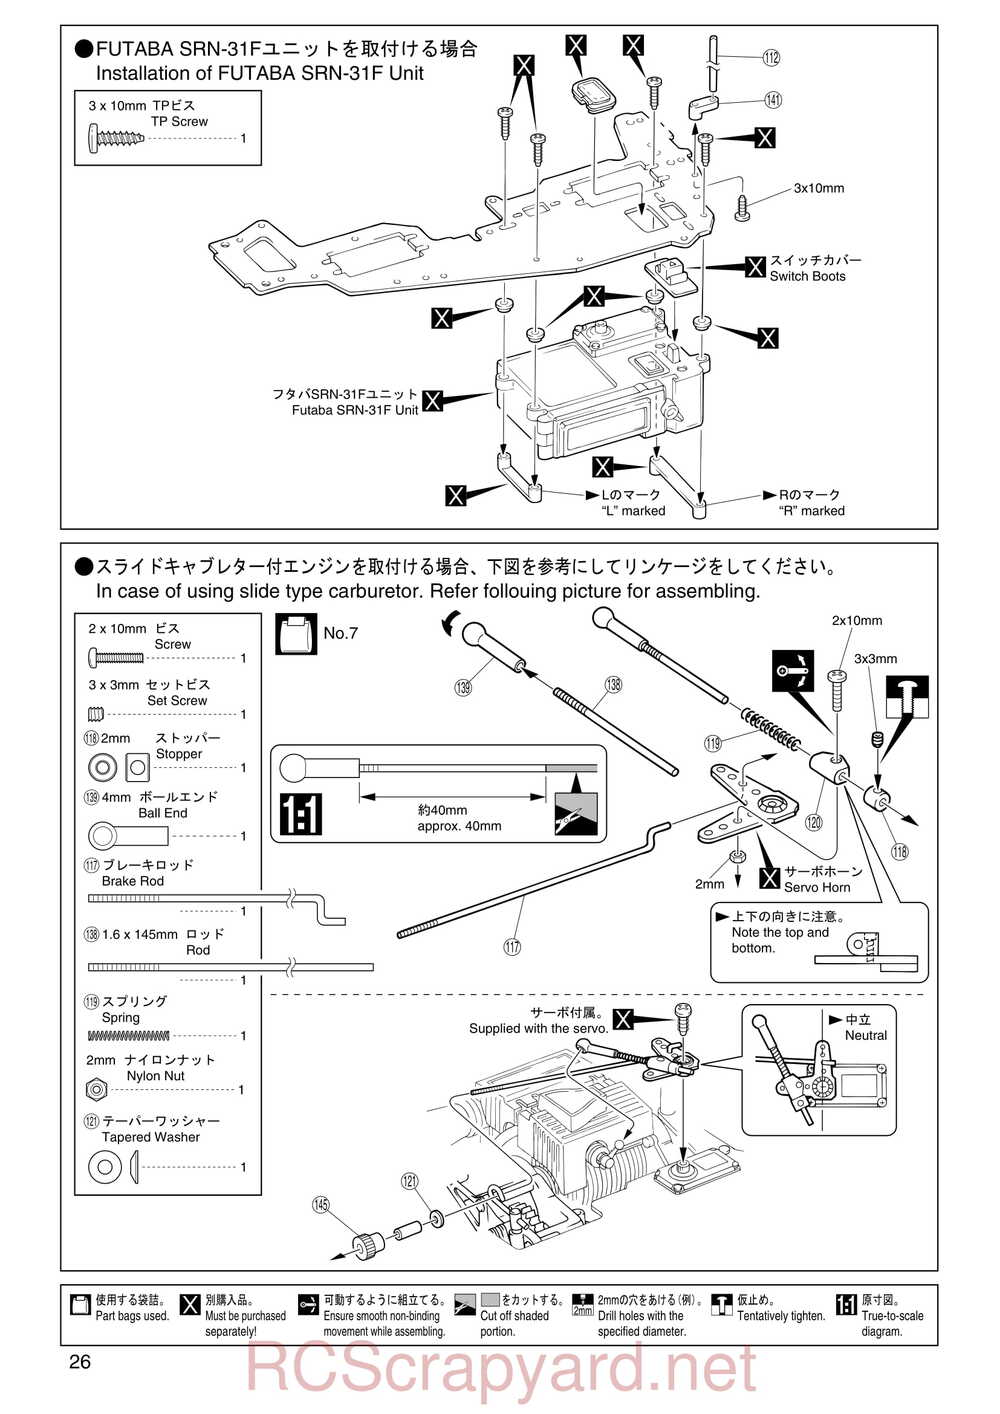 Kyosho - 31001 - GP SuperTen FW-04 - Manual - Page 26